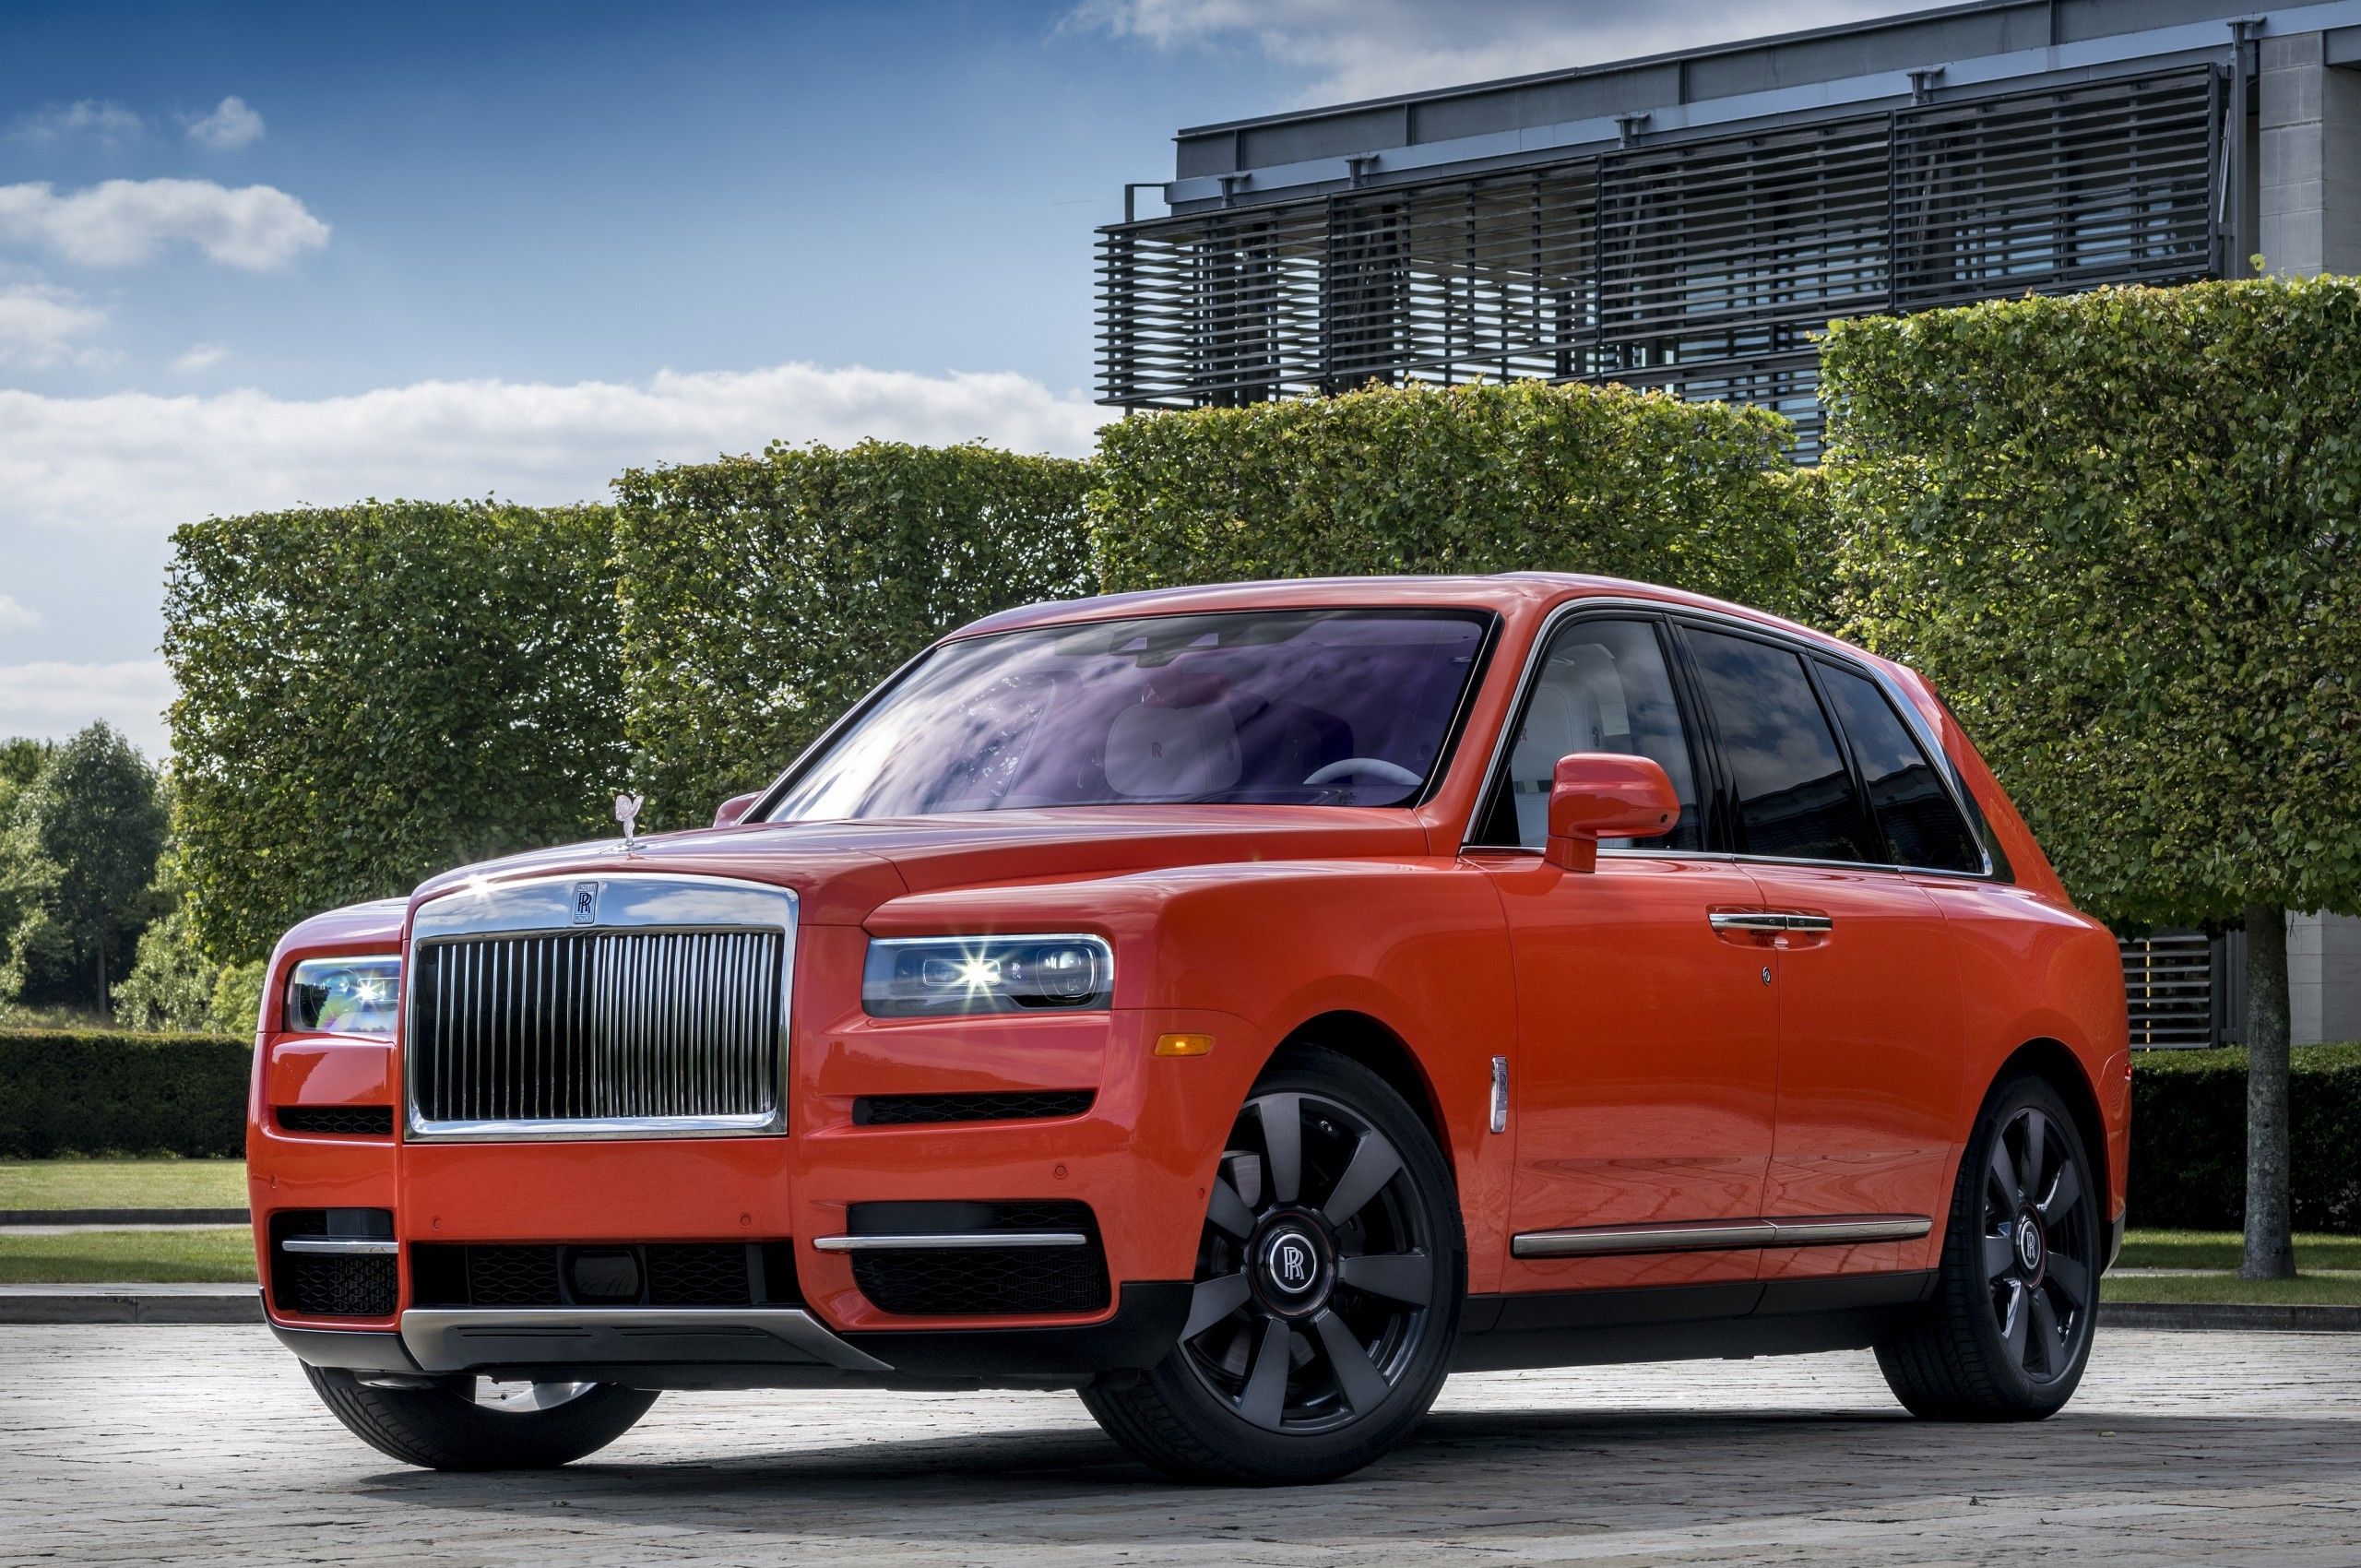 Download 2560x1700 Rolls Royce Cullinan, Luxury Suv Cars, Orange, Headlights Wallpaper For Chromebook Pixel